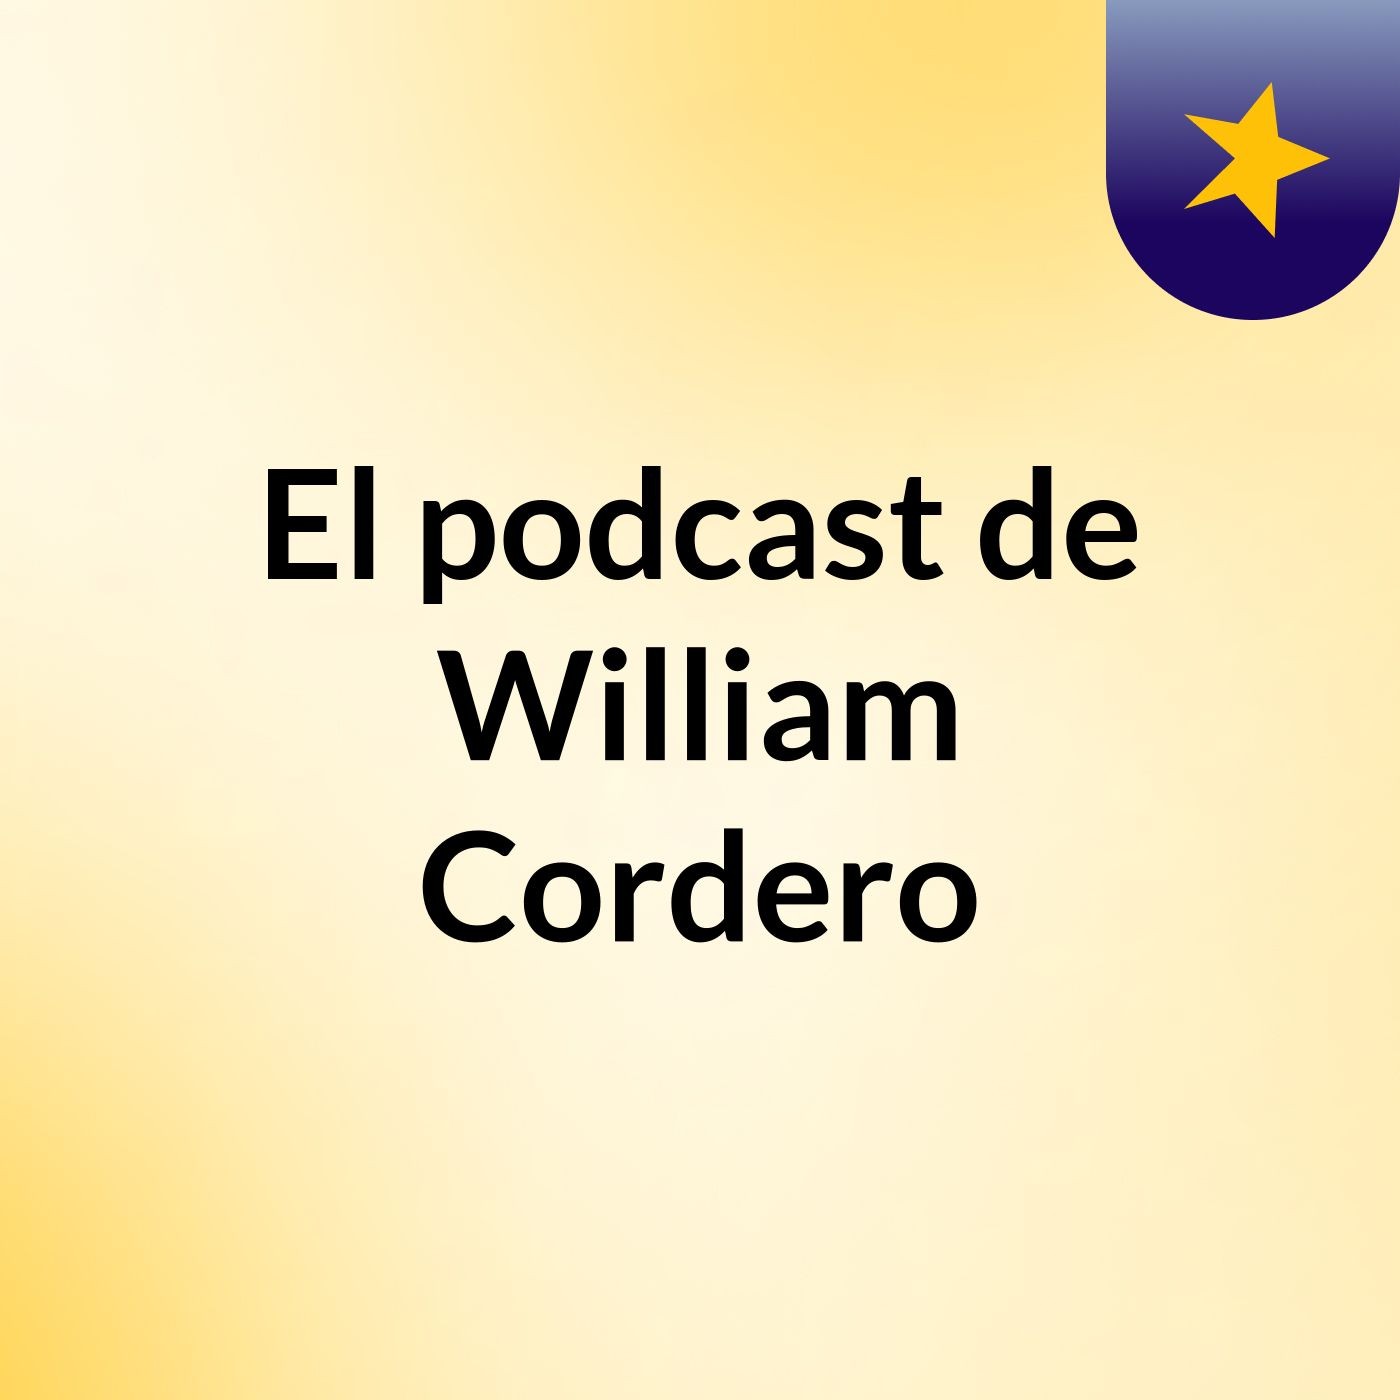 El podcast de William Cordero